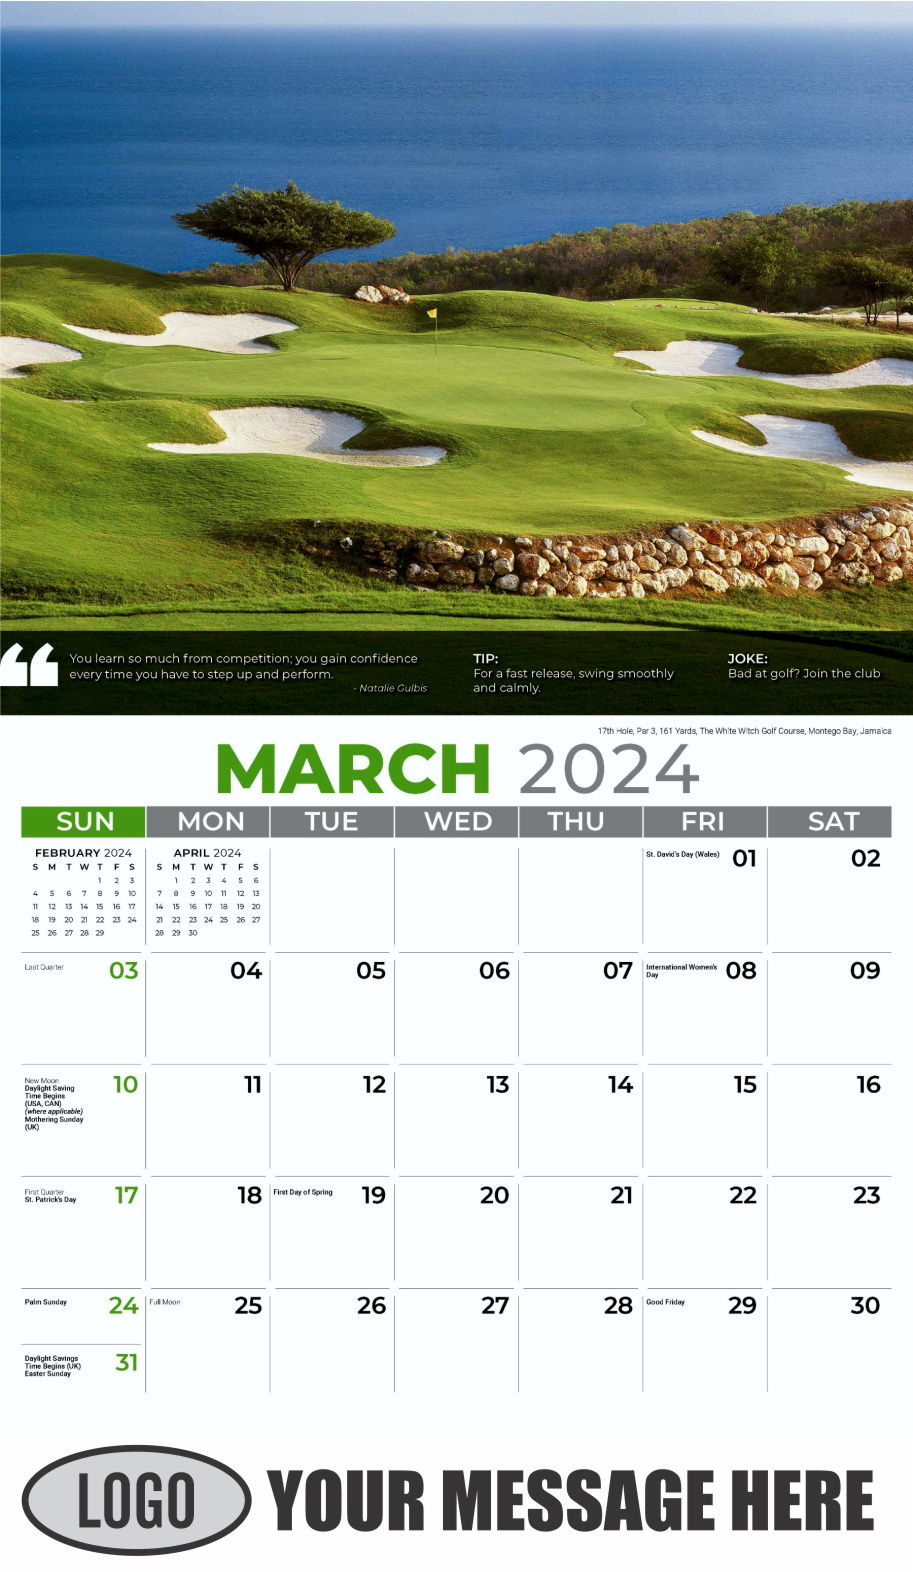 Golf Tips 2024 Business Promo Calendar - March